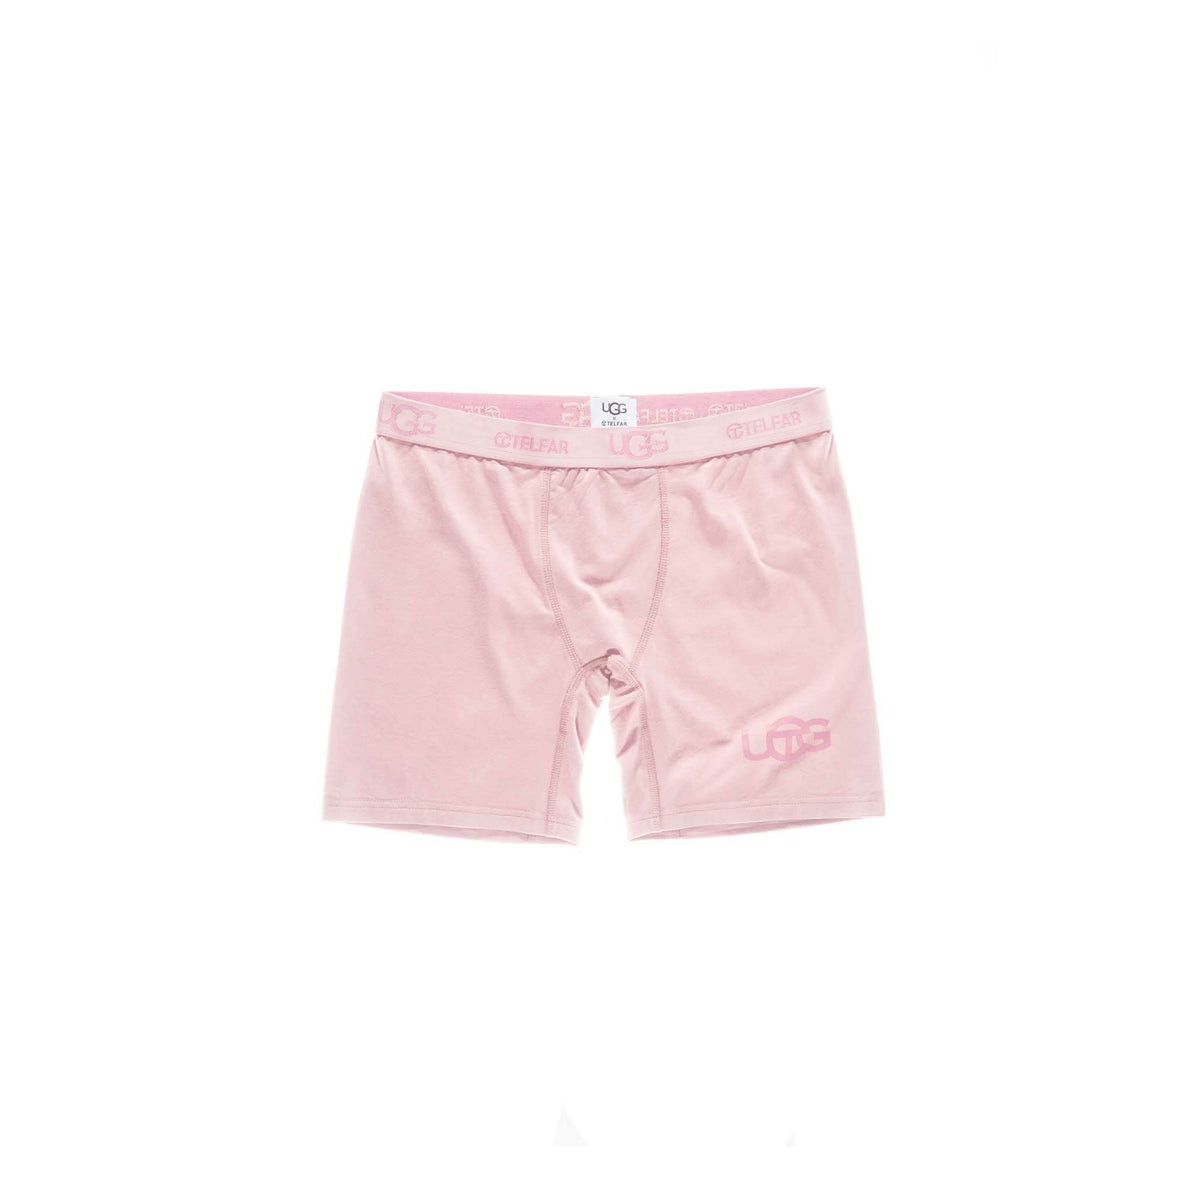 UGG x TELFAR Underwear - Pink